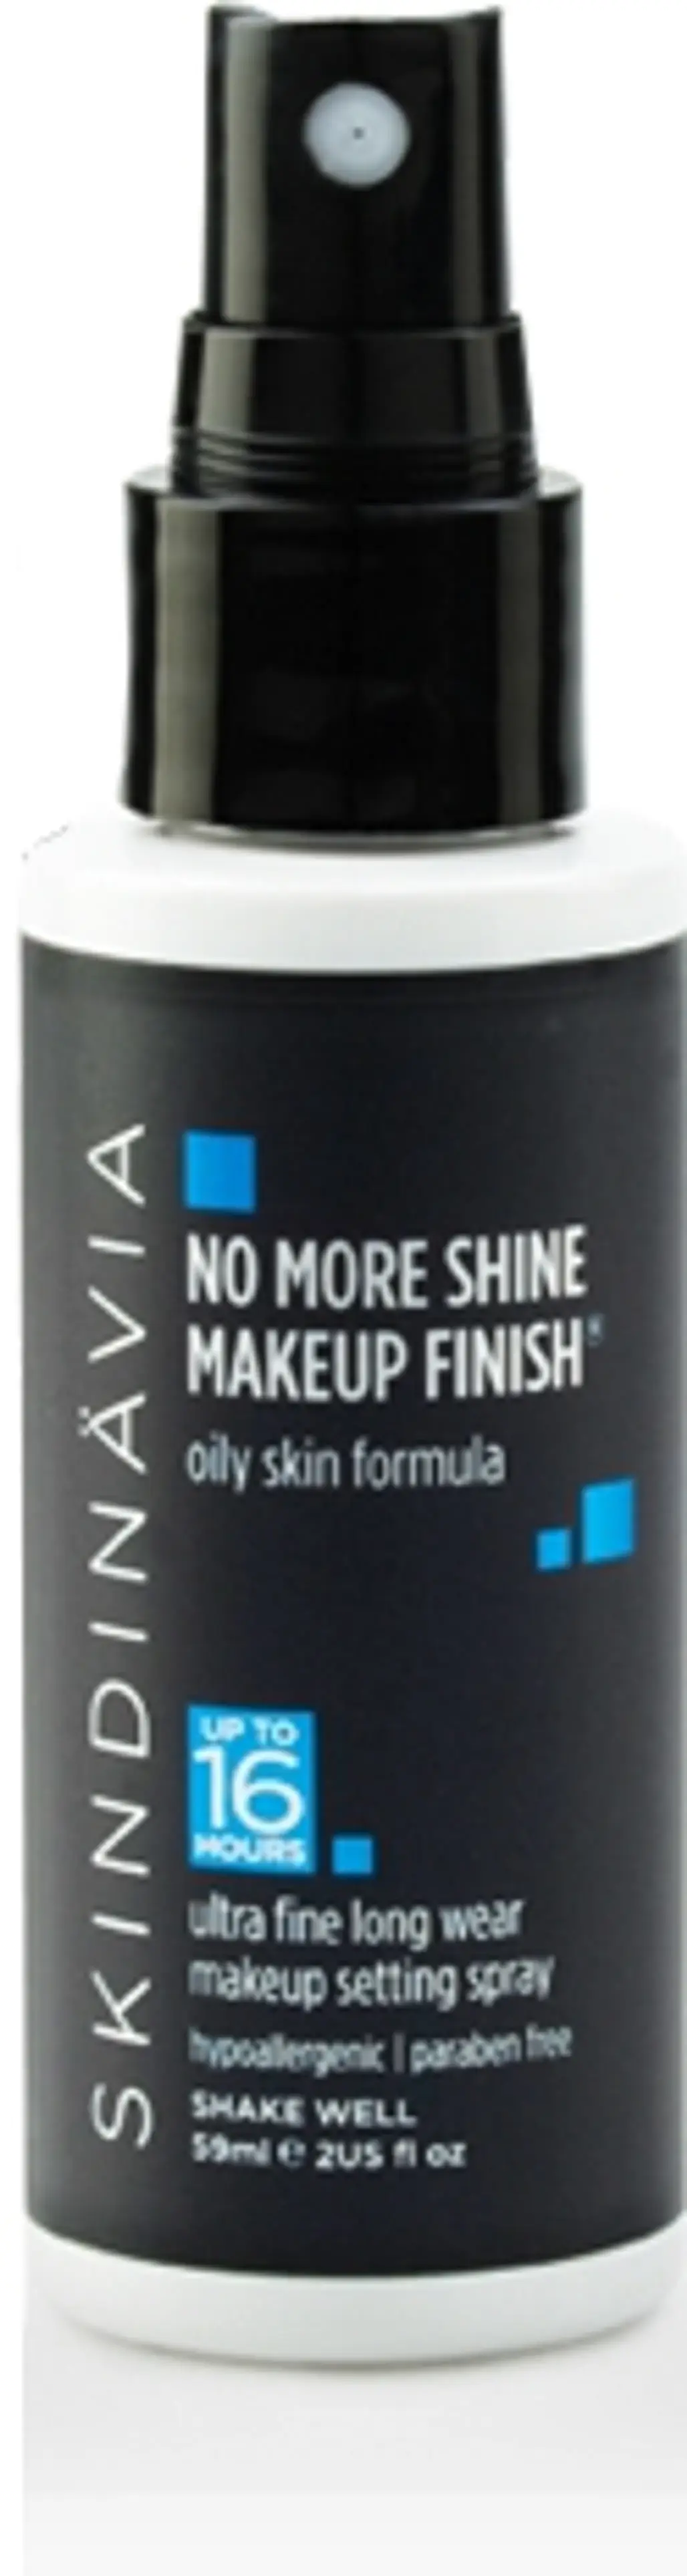 Skindinavia No More Shine Makeup Finish - for Oily Skin Types